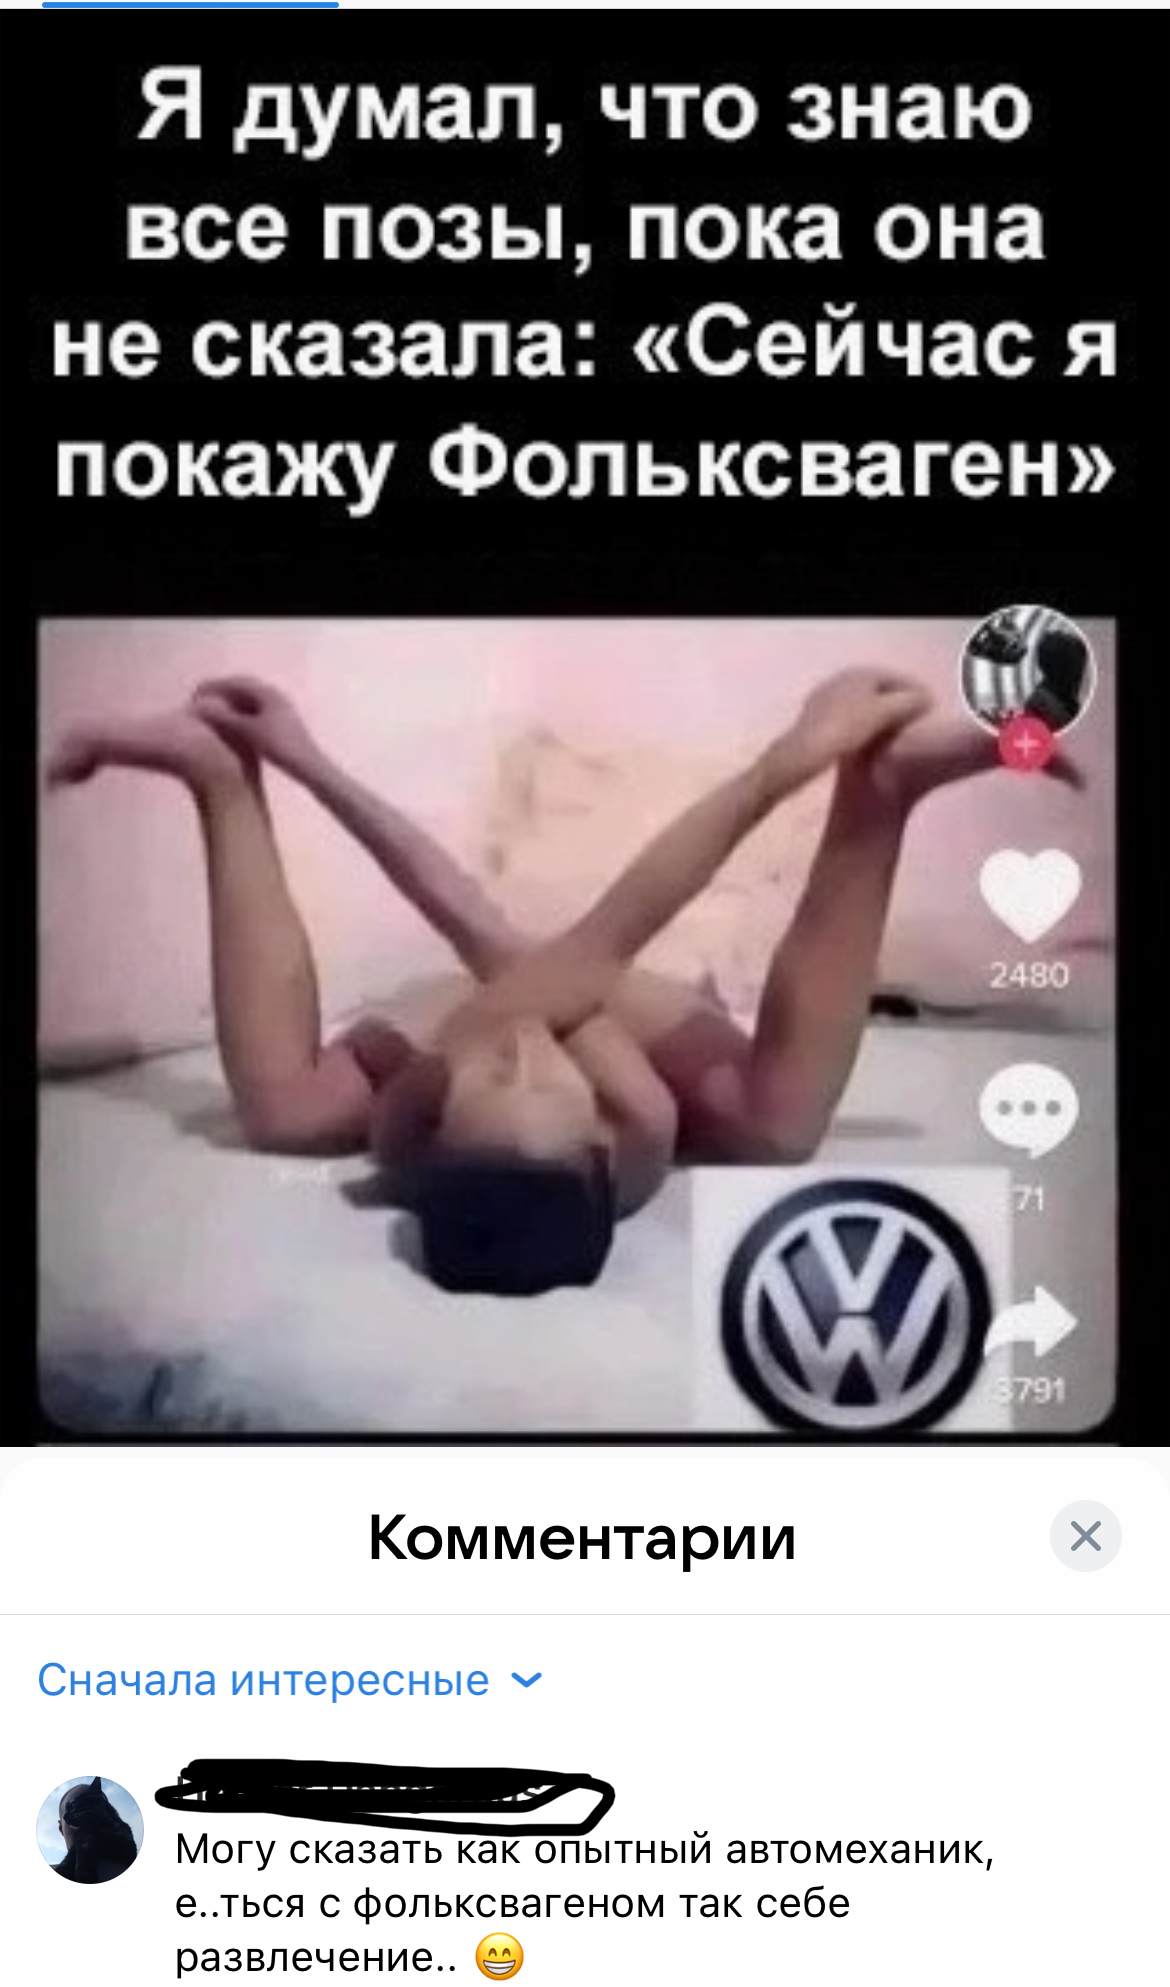 Funny comments - Volkswagen, Emblem